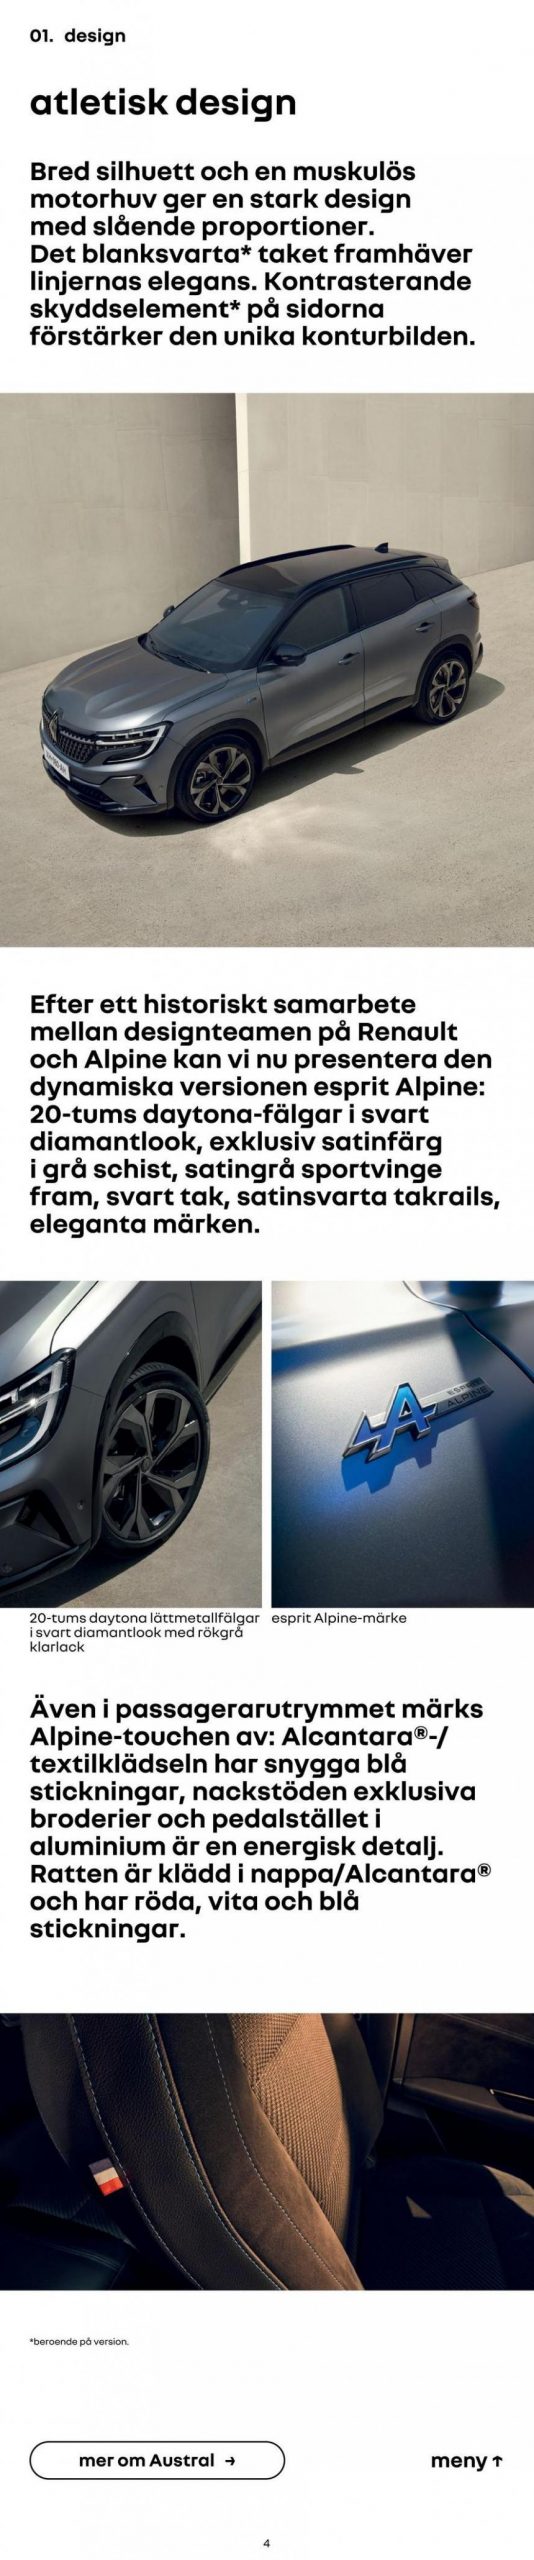 Renault Nya Austral. Page 4